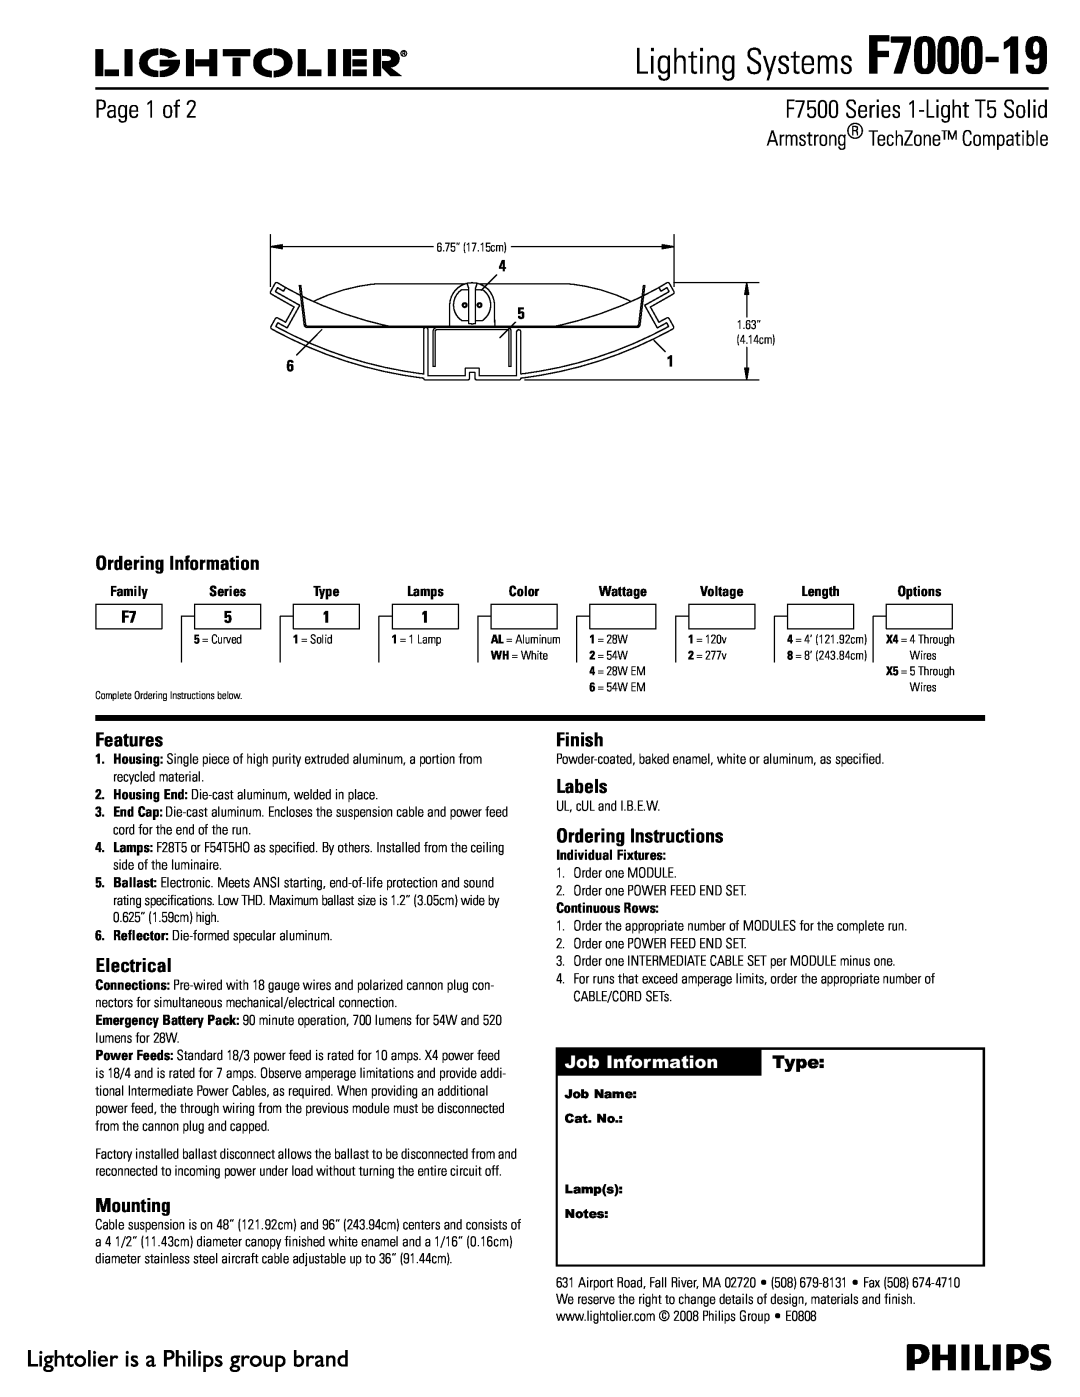 Lightolier specifications Lighting Systems F7000-19, 4FSJFT-JHIU54PMJE, Job Information, Type, 1BHFPG 